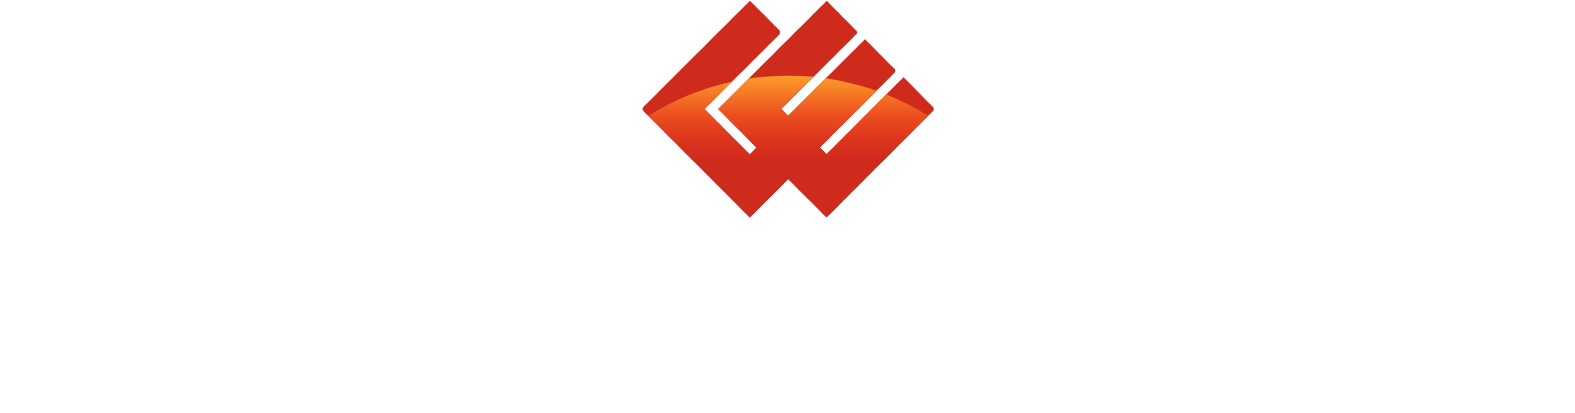 China Longyuan Power Group Logo groß für dunkle Hintergründe (transparentes PNG)